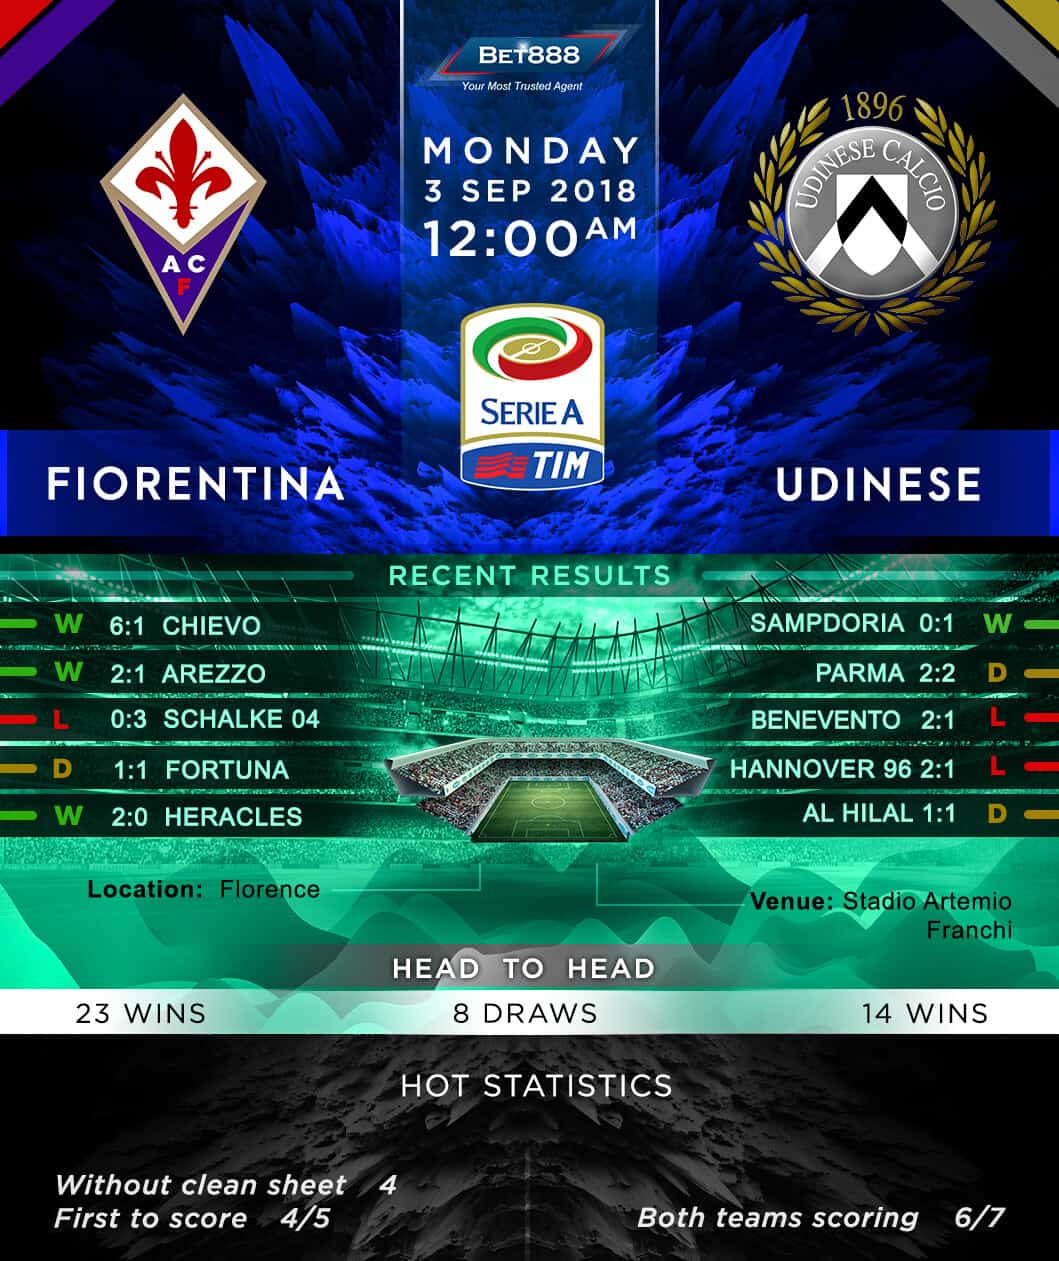 Fiorentina vs Udinese 03/09/18